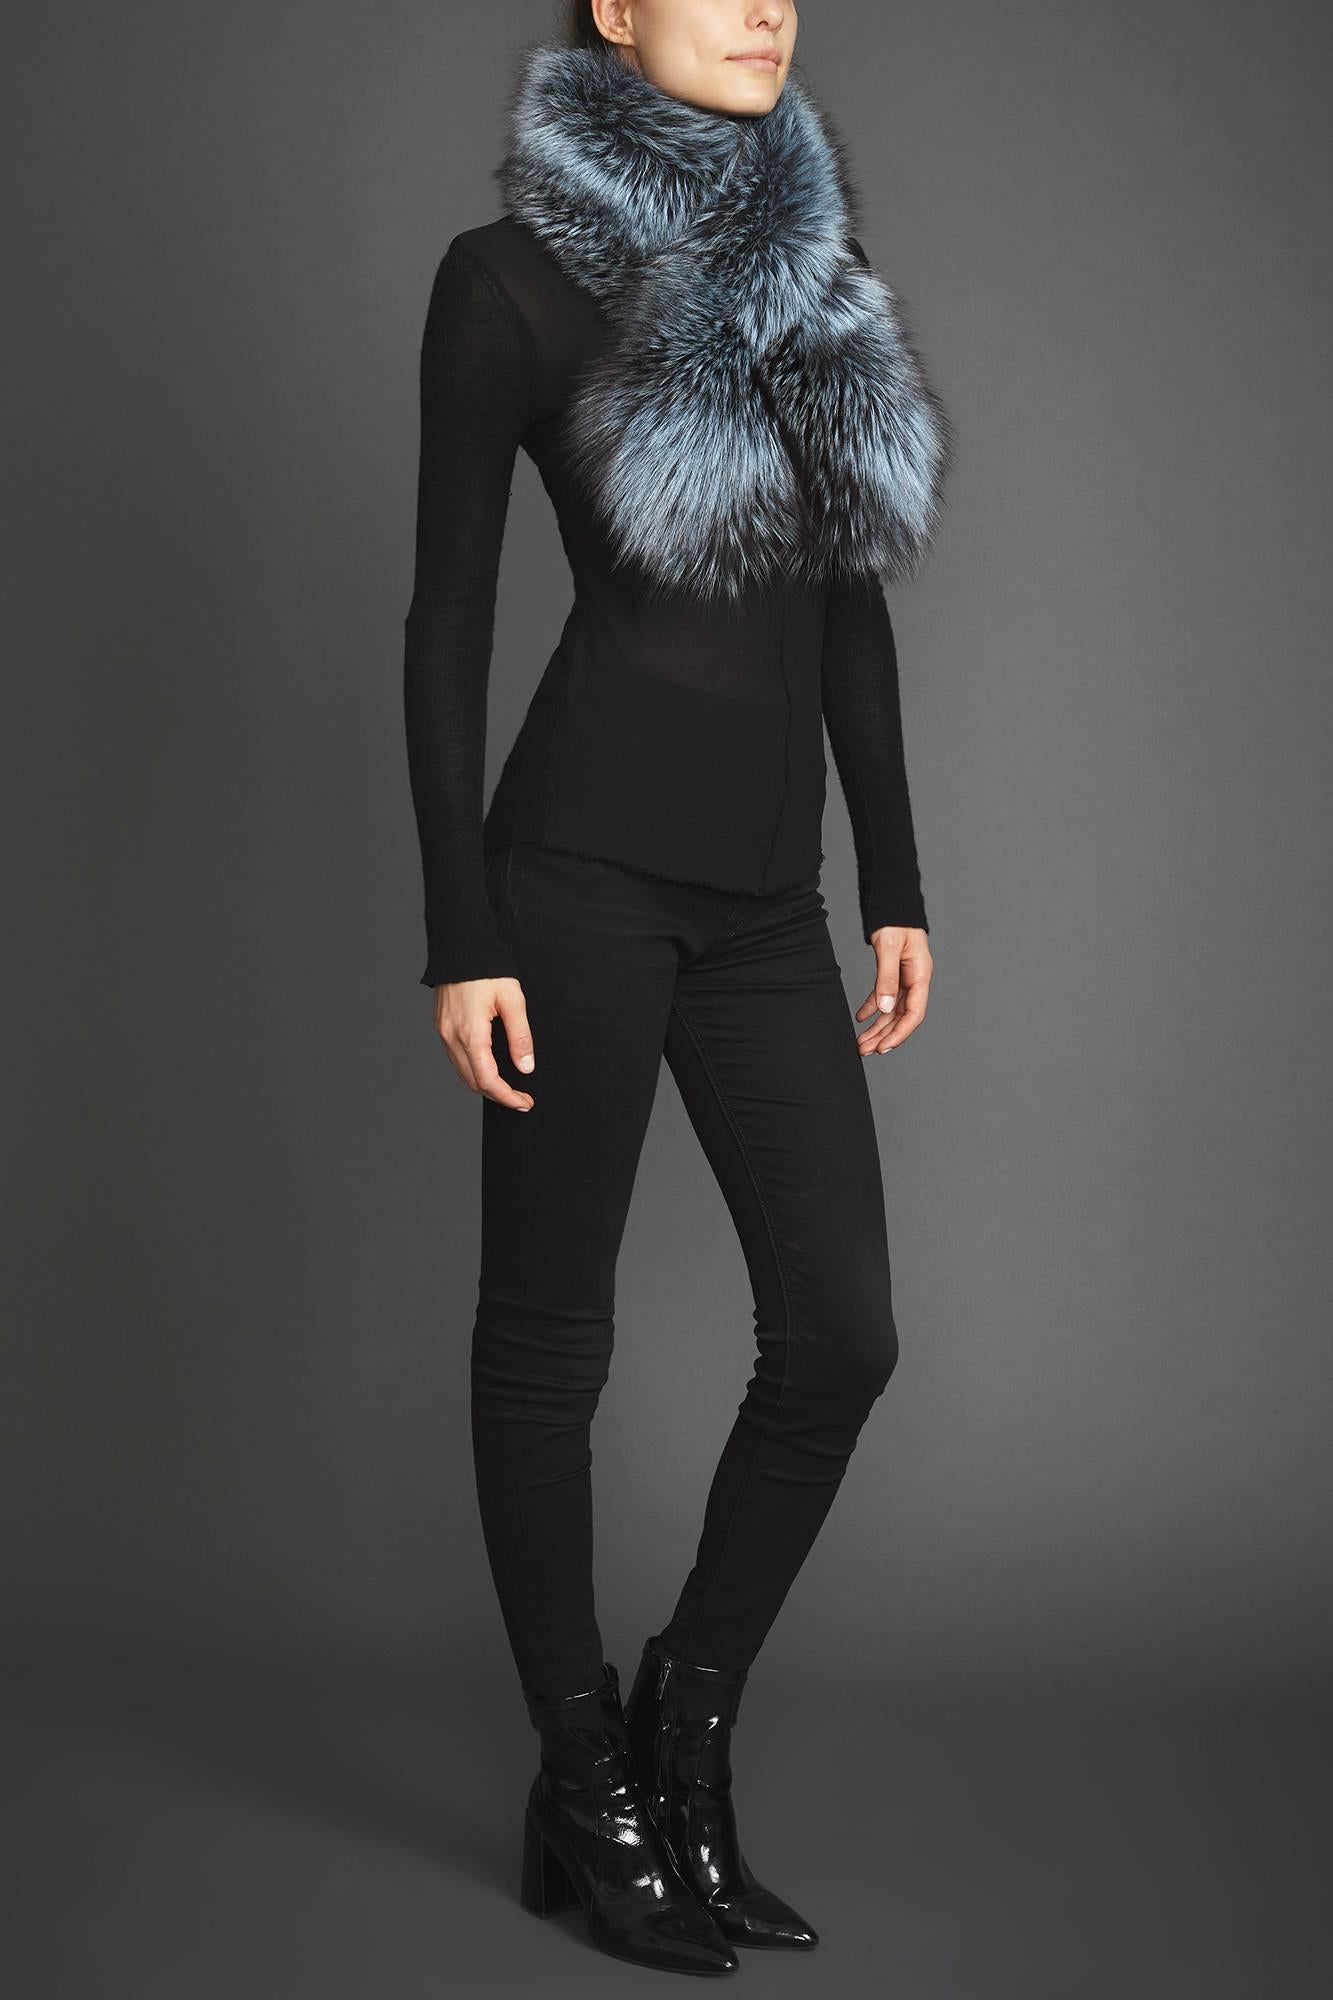 Women's or Men's Verheyen London Lapel Cross-through Collar in Iced Topaz Fox Fur - Brand New